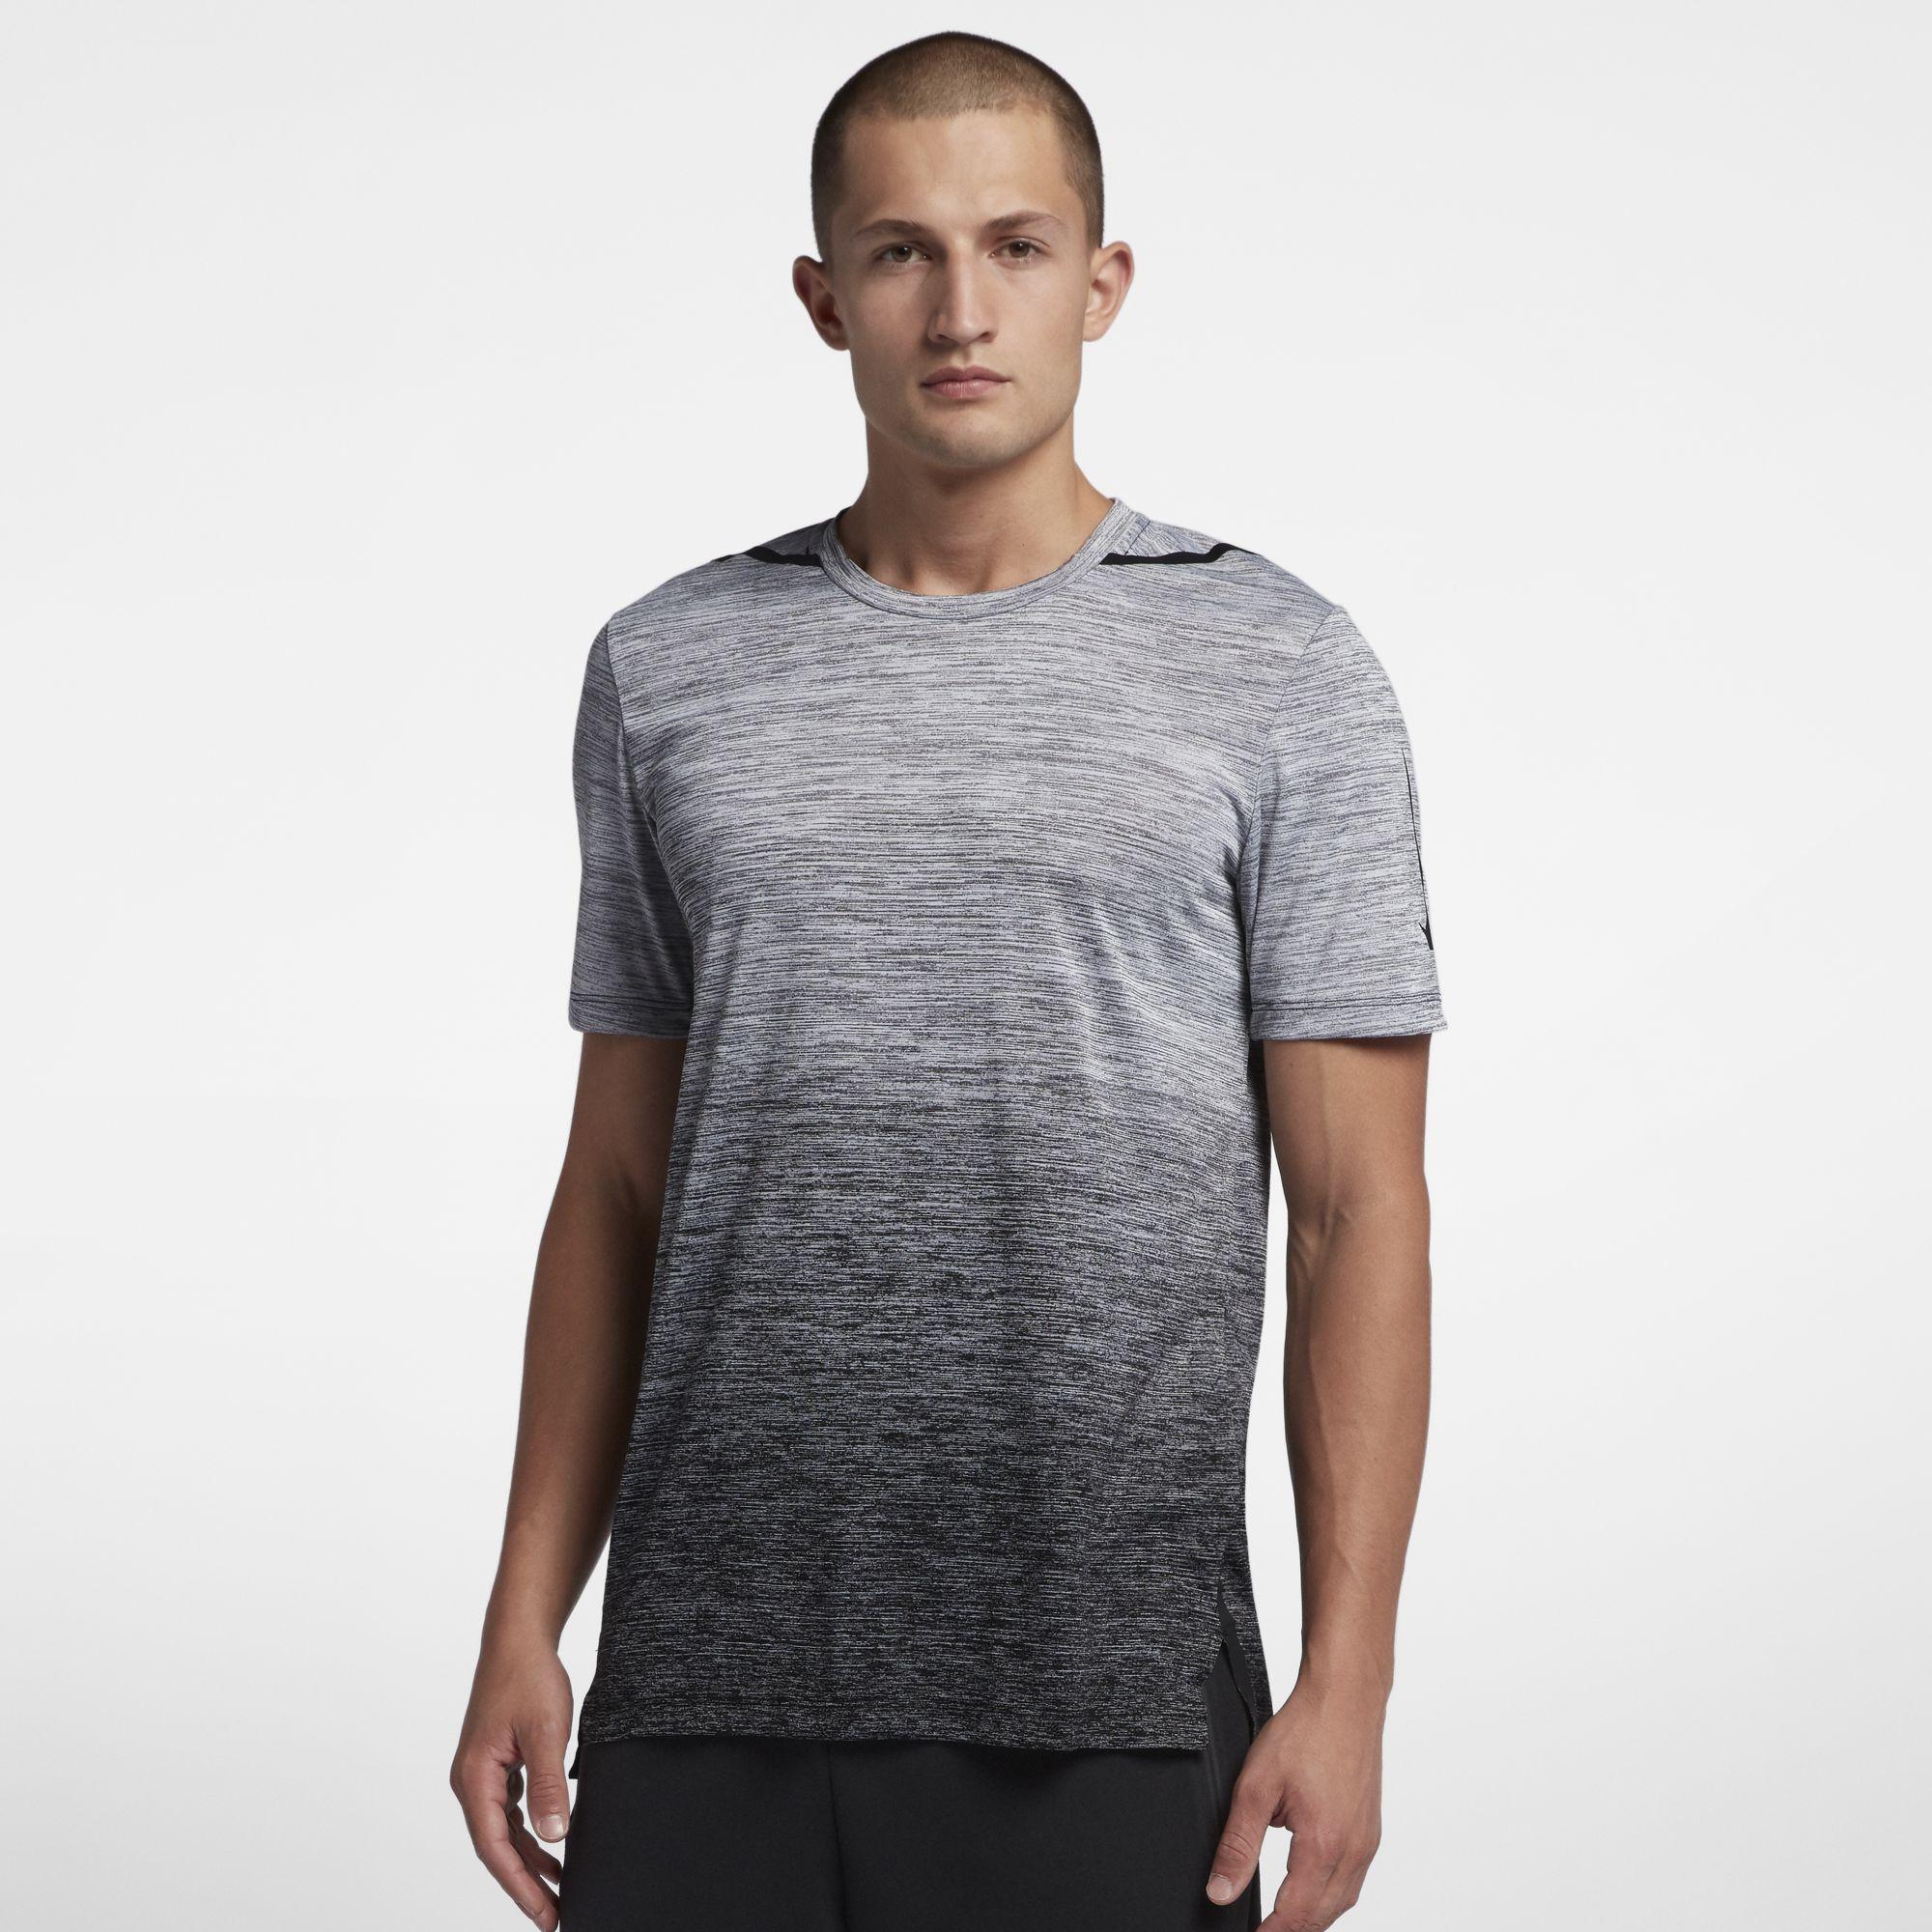 Nike Mens Short Sleeve Training Top - Grey - Tennisnuts.com